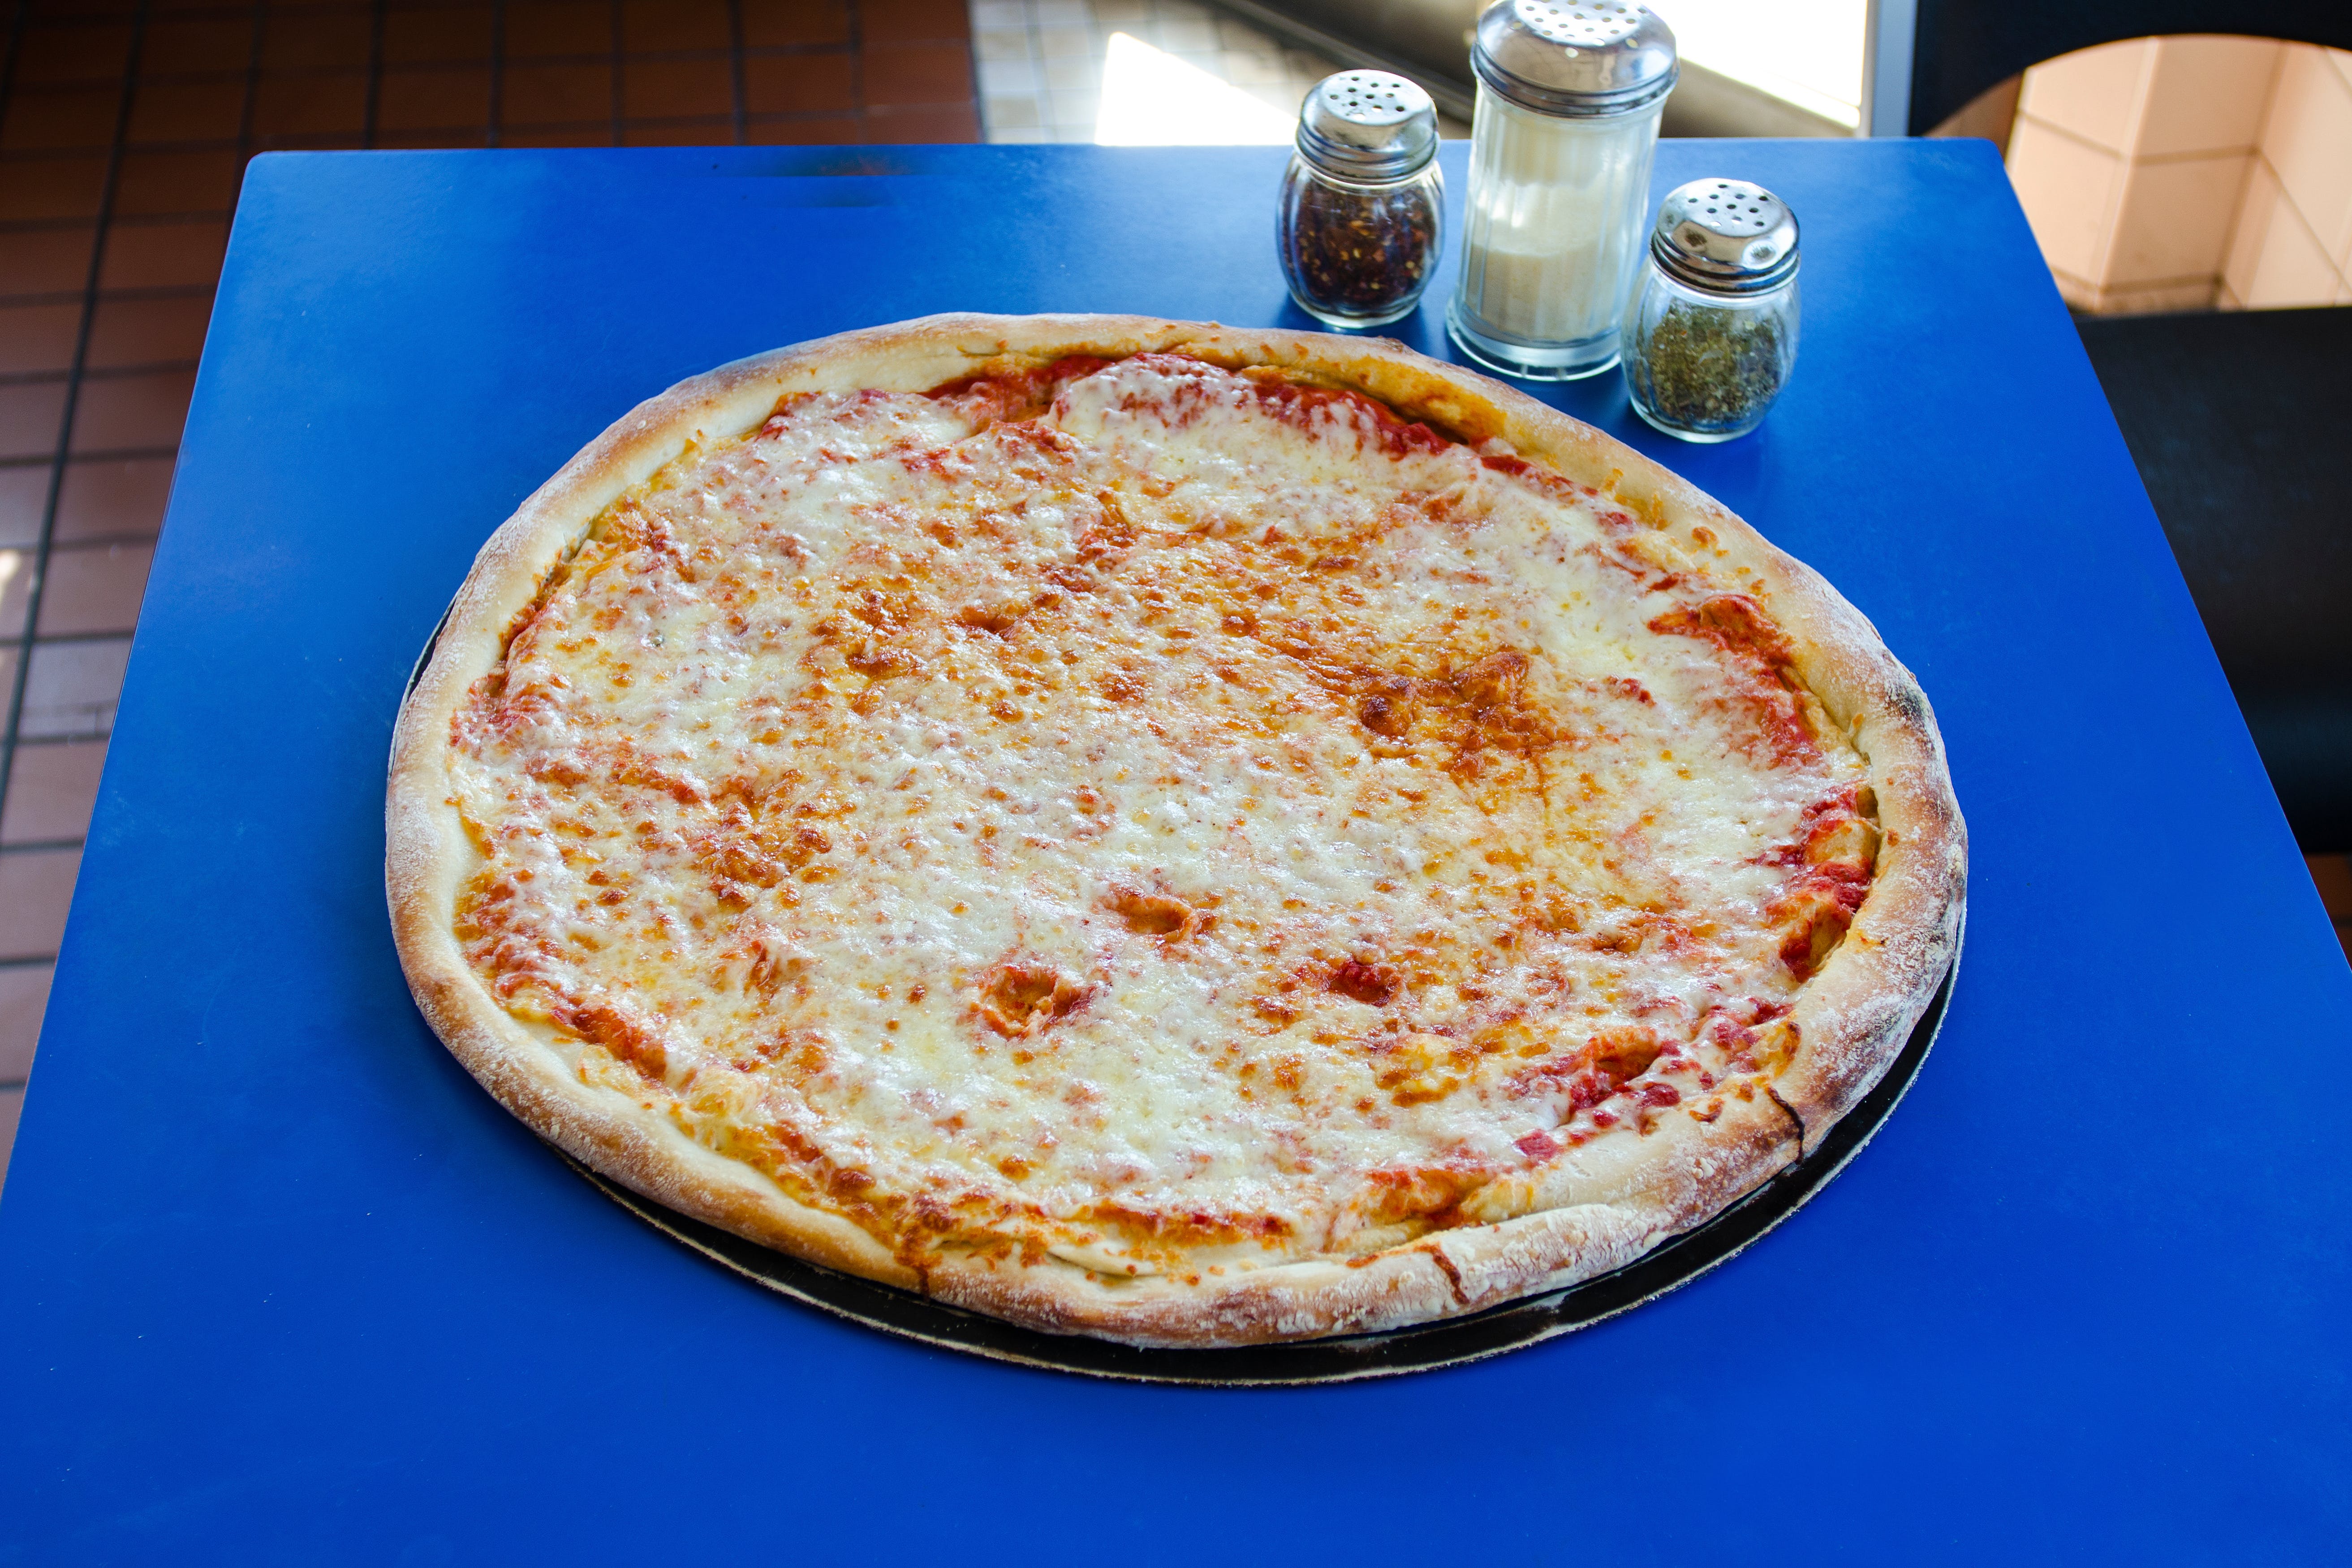 Galaxy Pizza Menu - 1239 Cottman Ave, Philadelphia, PA 19111 | Slice